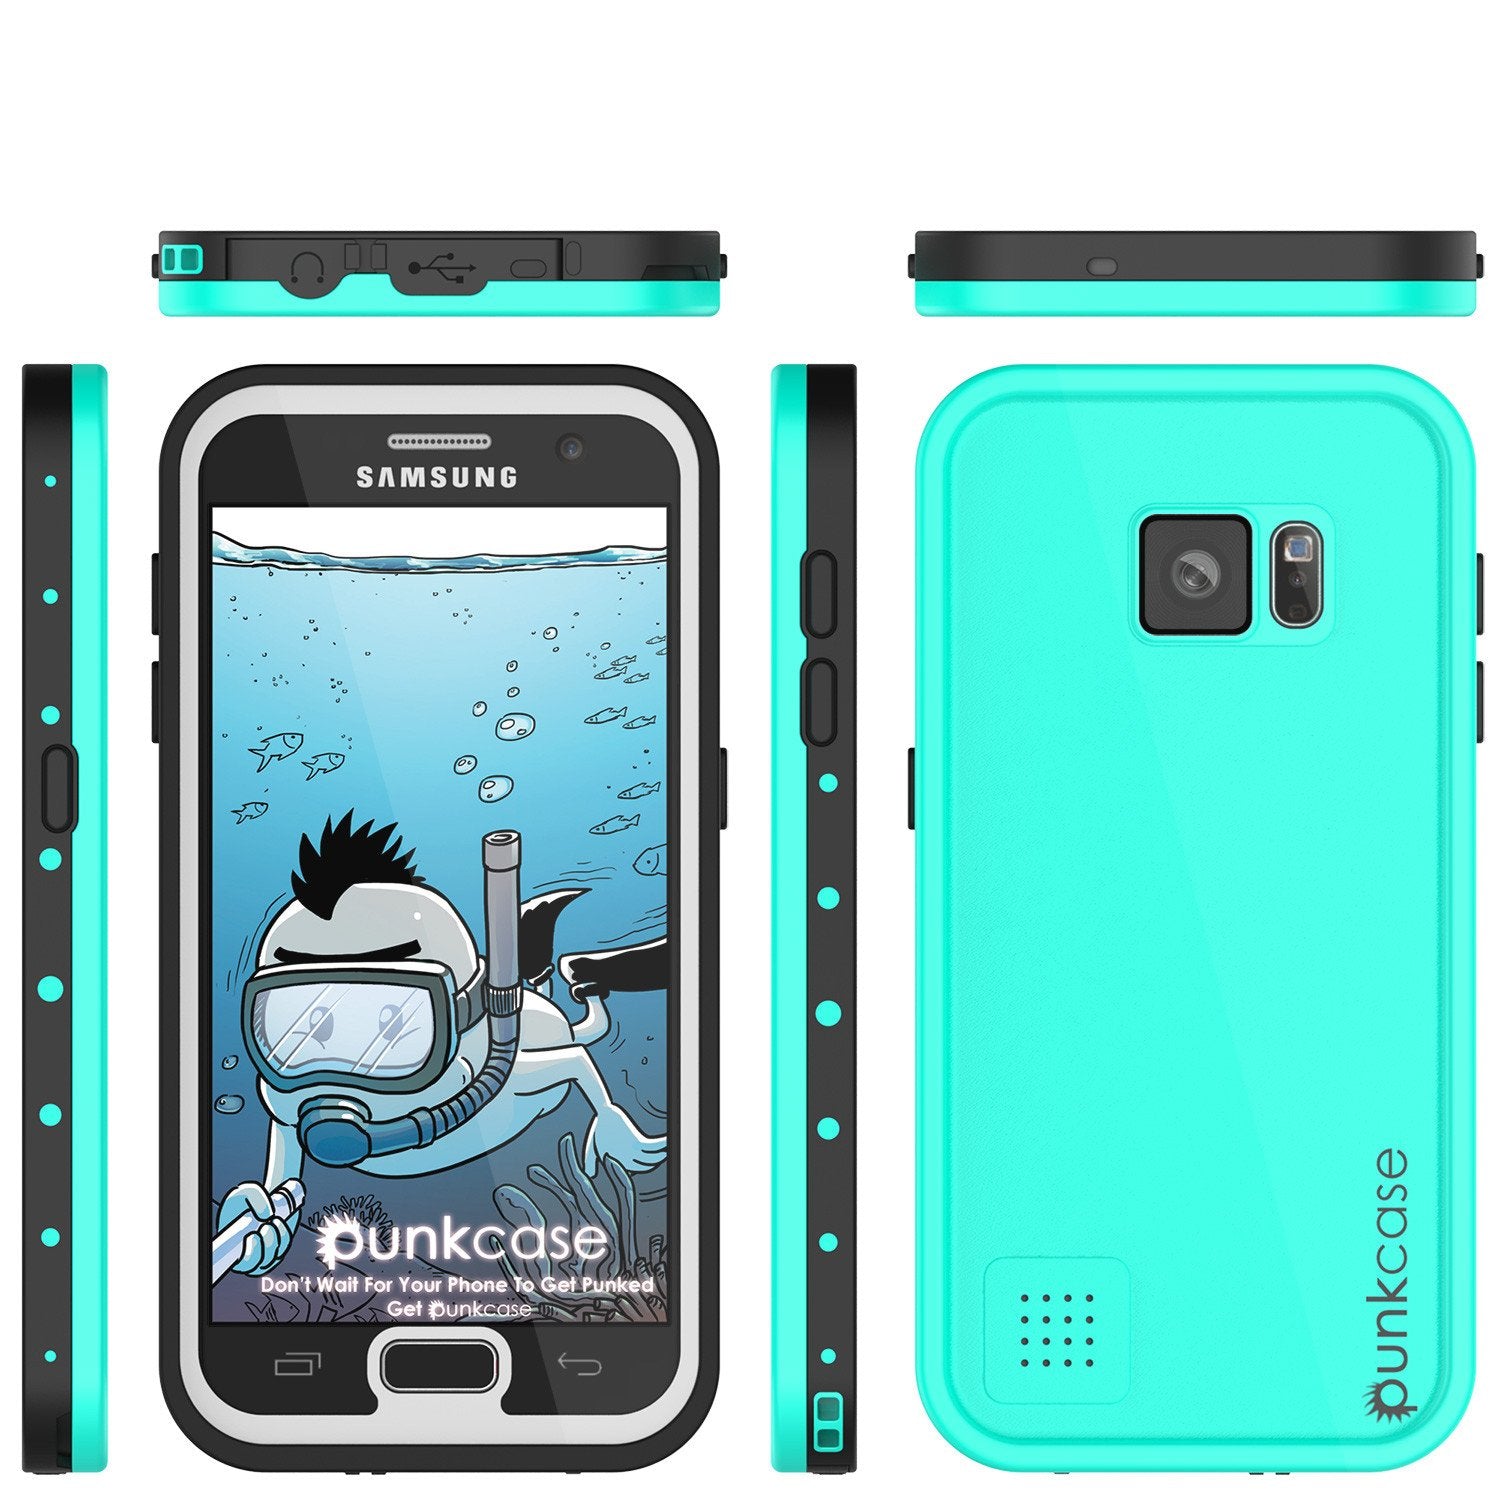 Galaxy S7 Waterproof Case PunkCase StudStar Teal Thin 6.6ft Underwater IP68 Shock/Dirt/Snow Proof